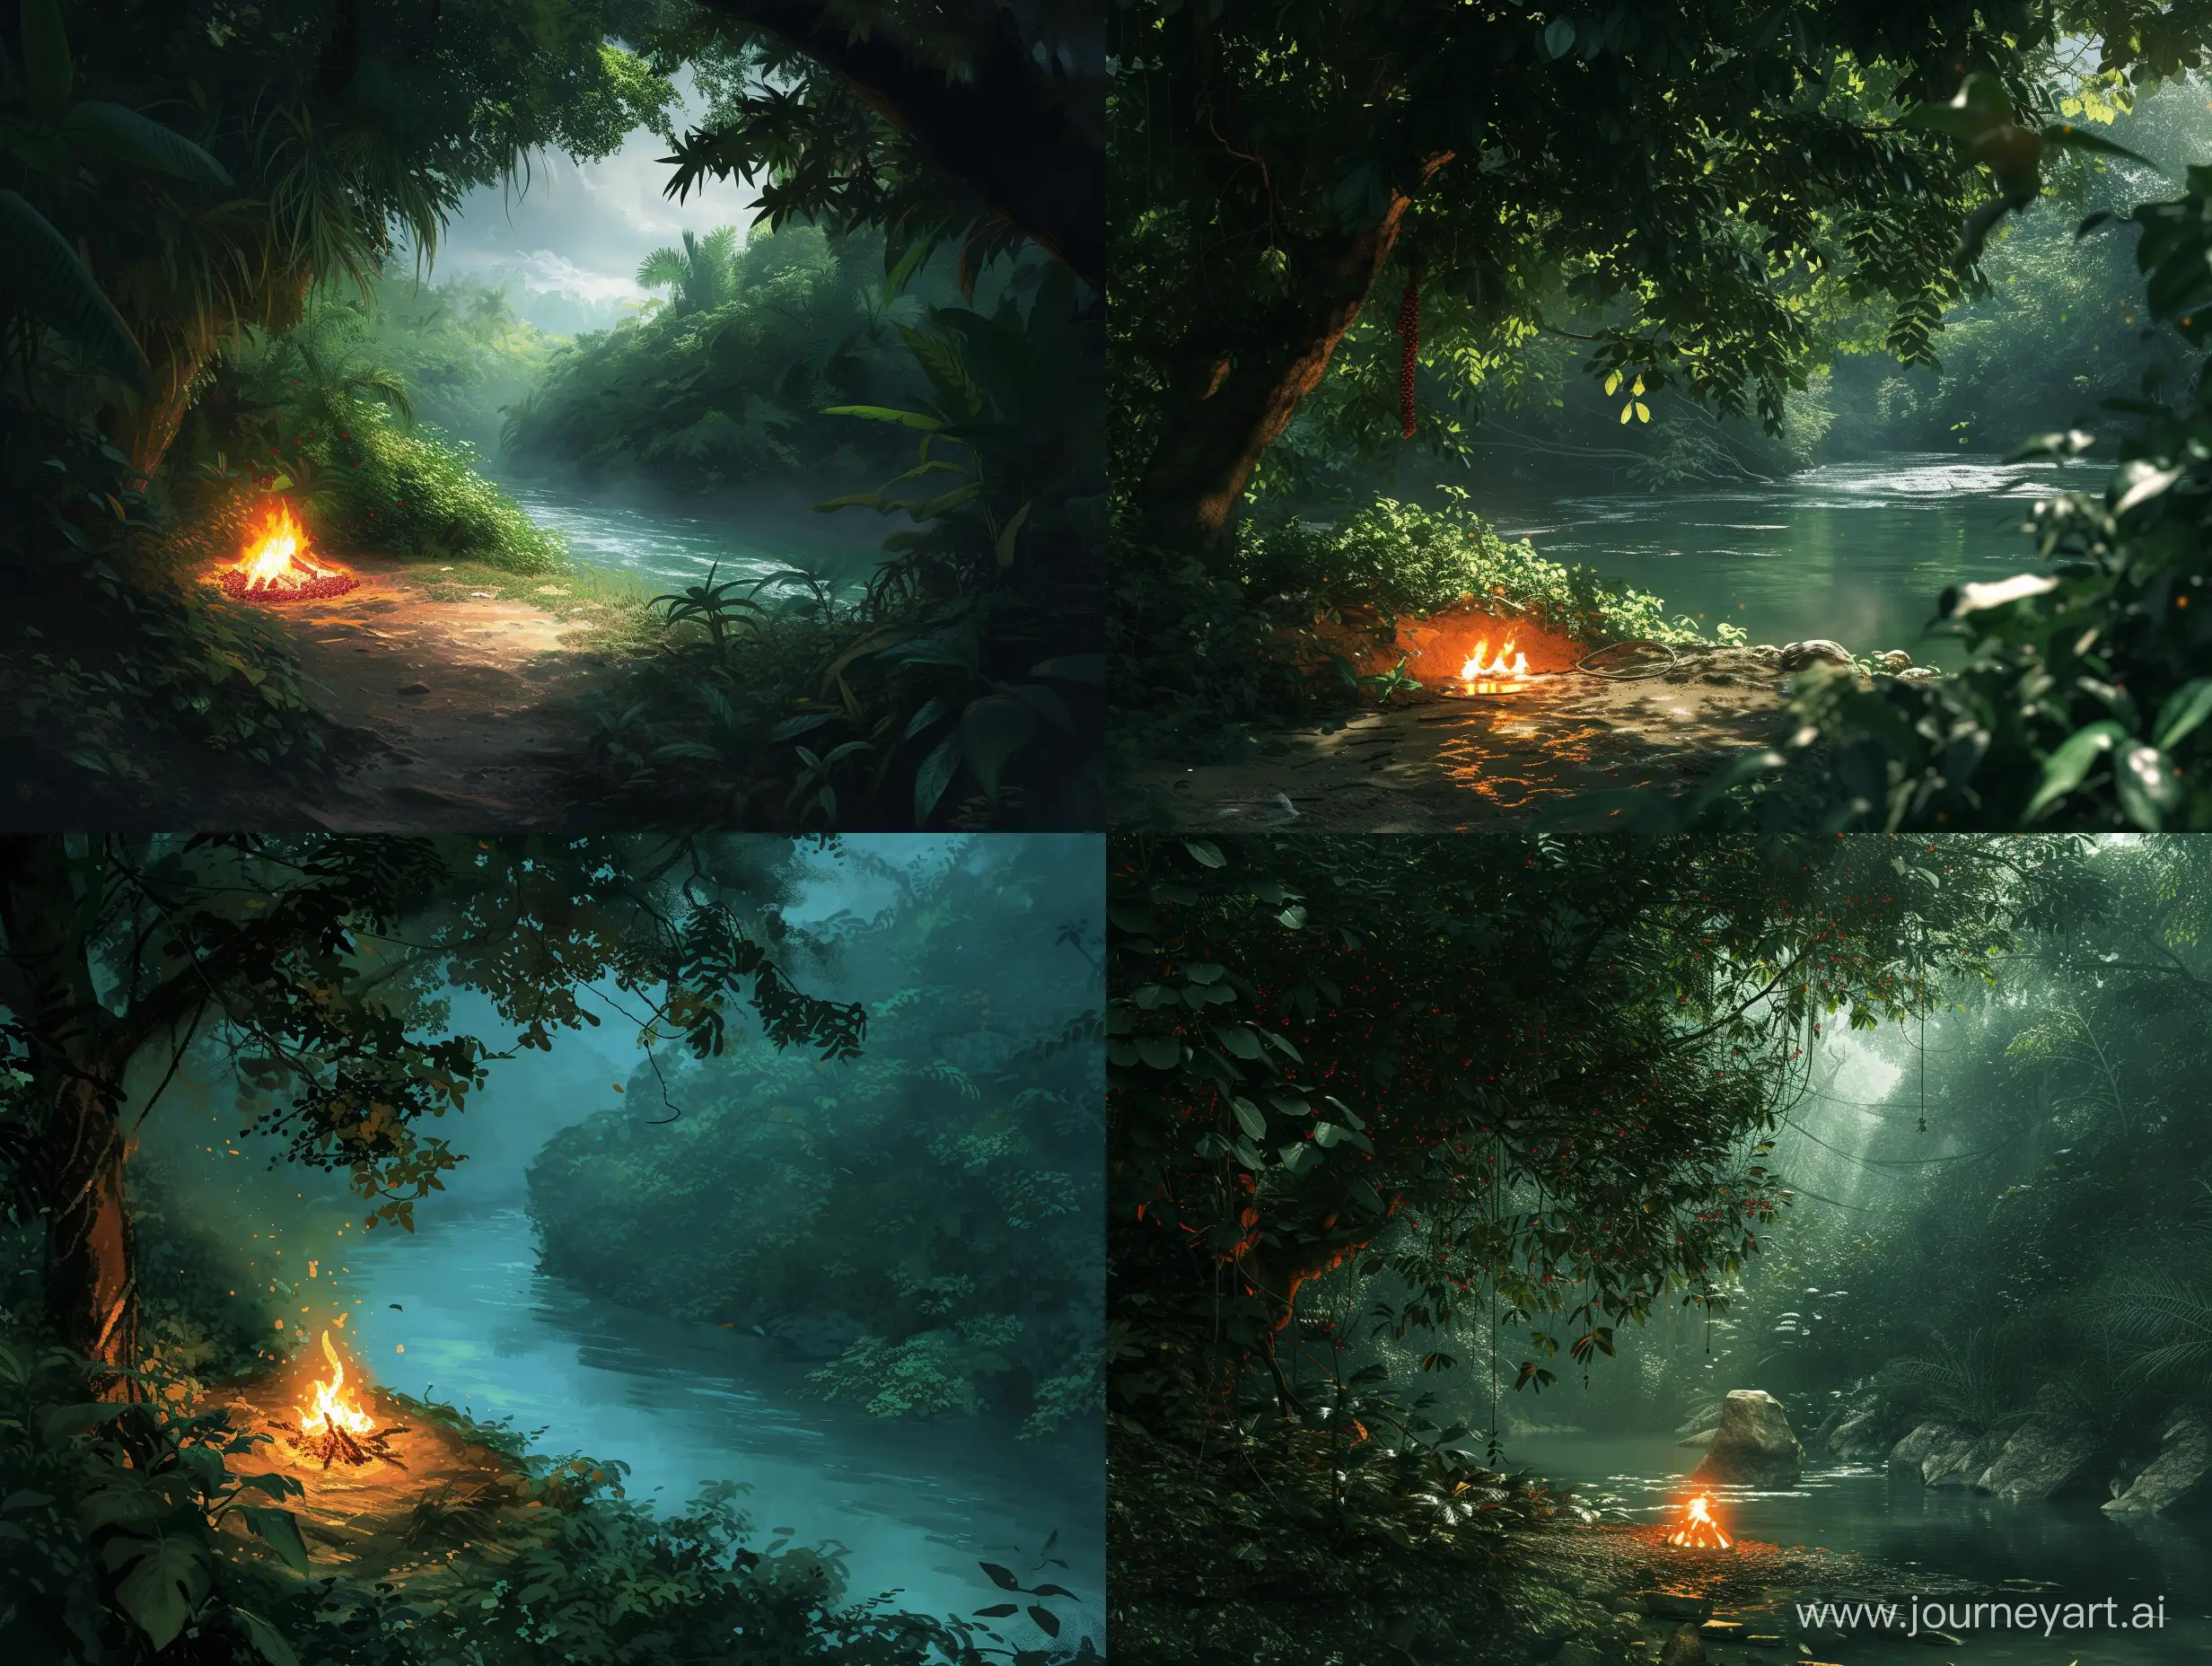 Hadi exploring a dense jungle near a river, discovering a small bonfire under a mulberry tree.